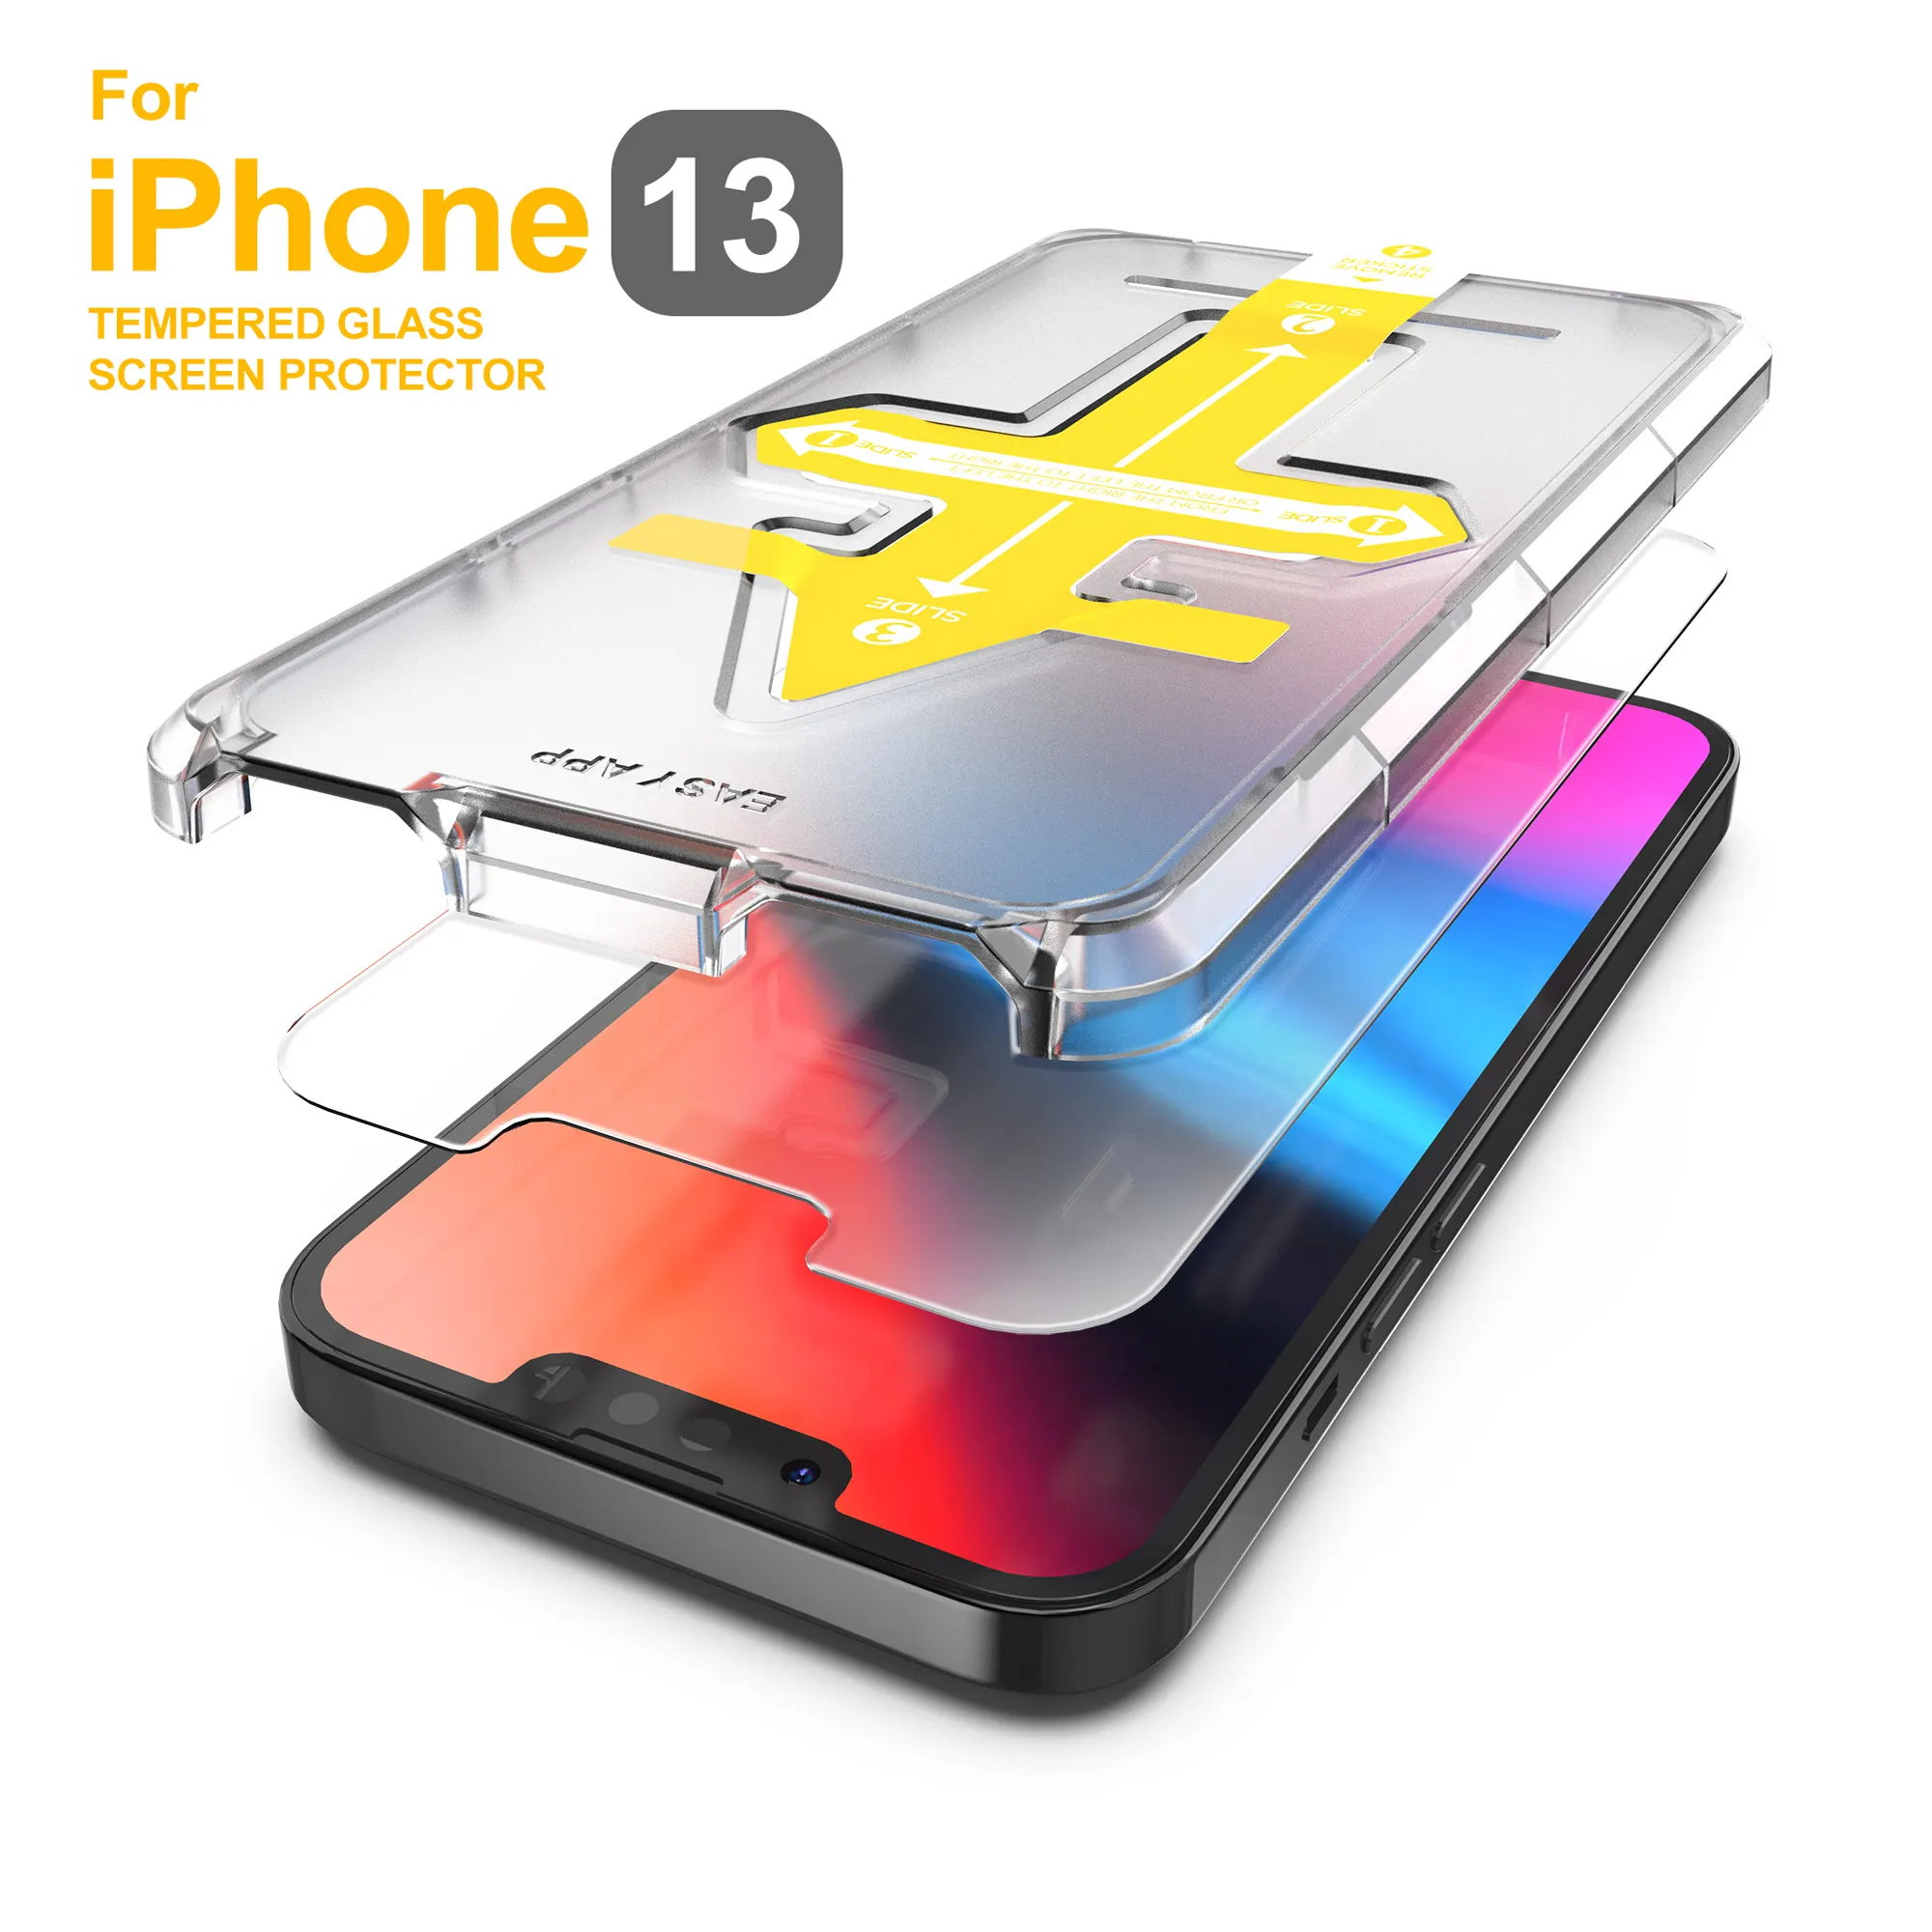 Fácil aplicación de vidrio templado para iPhone 12 Alineación automática Kit para iPhone 14 13 Protector de pantalla con fácil Marco de instalación